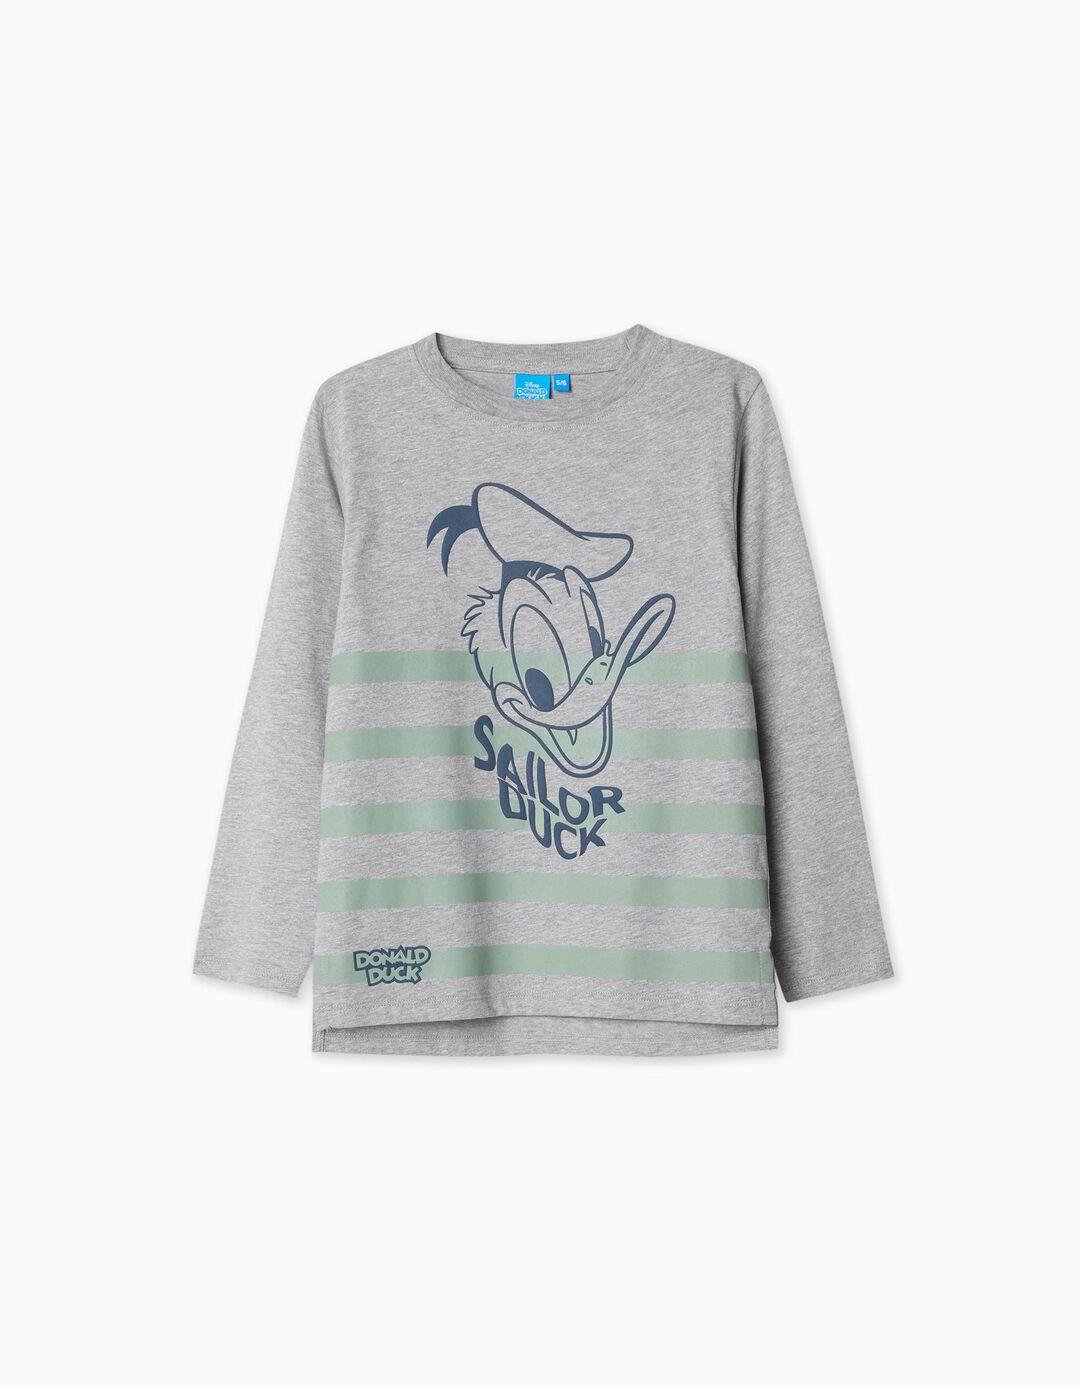 'Disney' Long Sleeve T-shirt, Boy, Light Gray